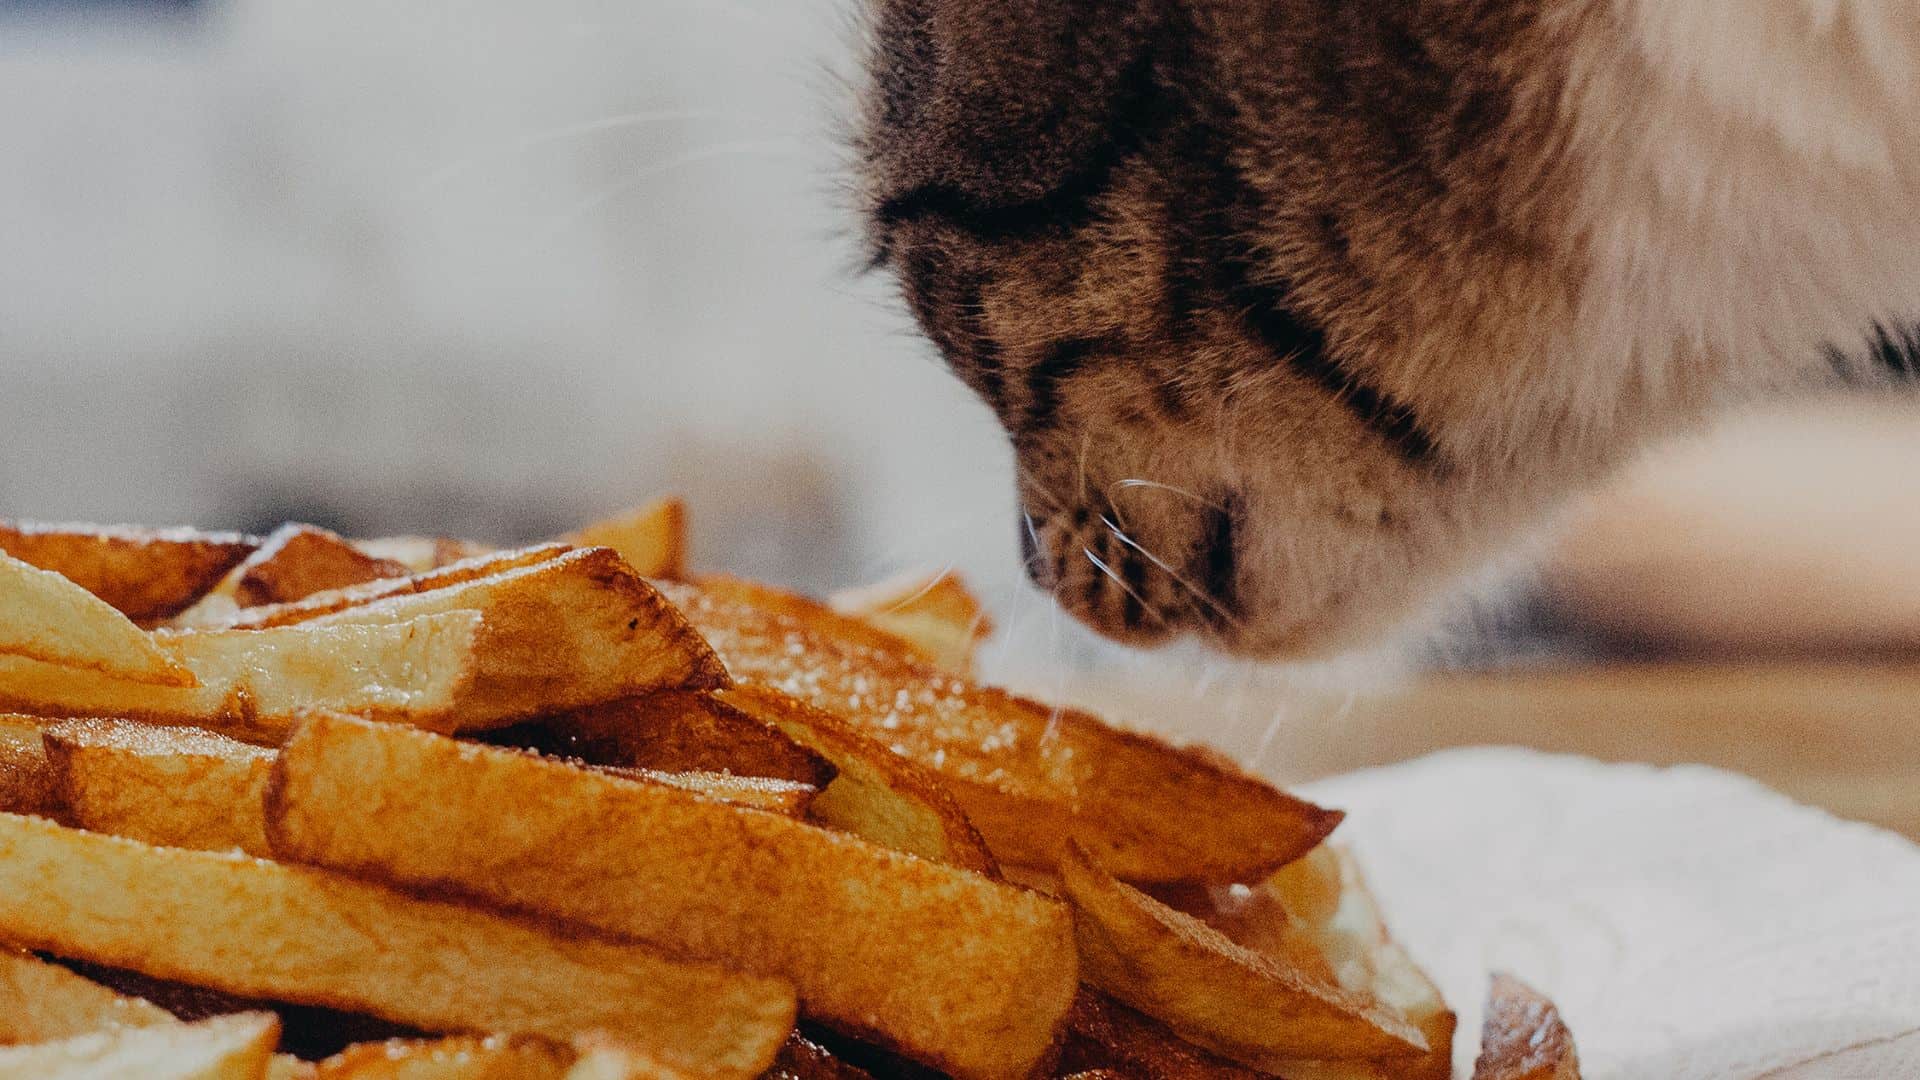 cat eating fries